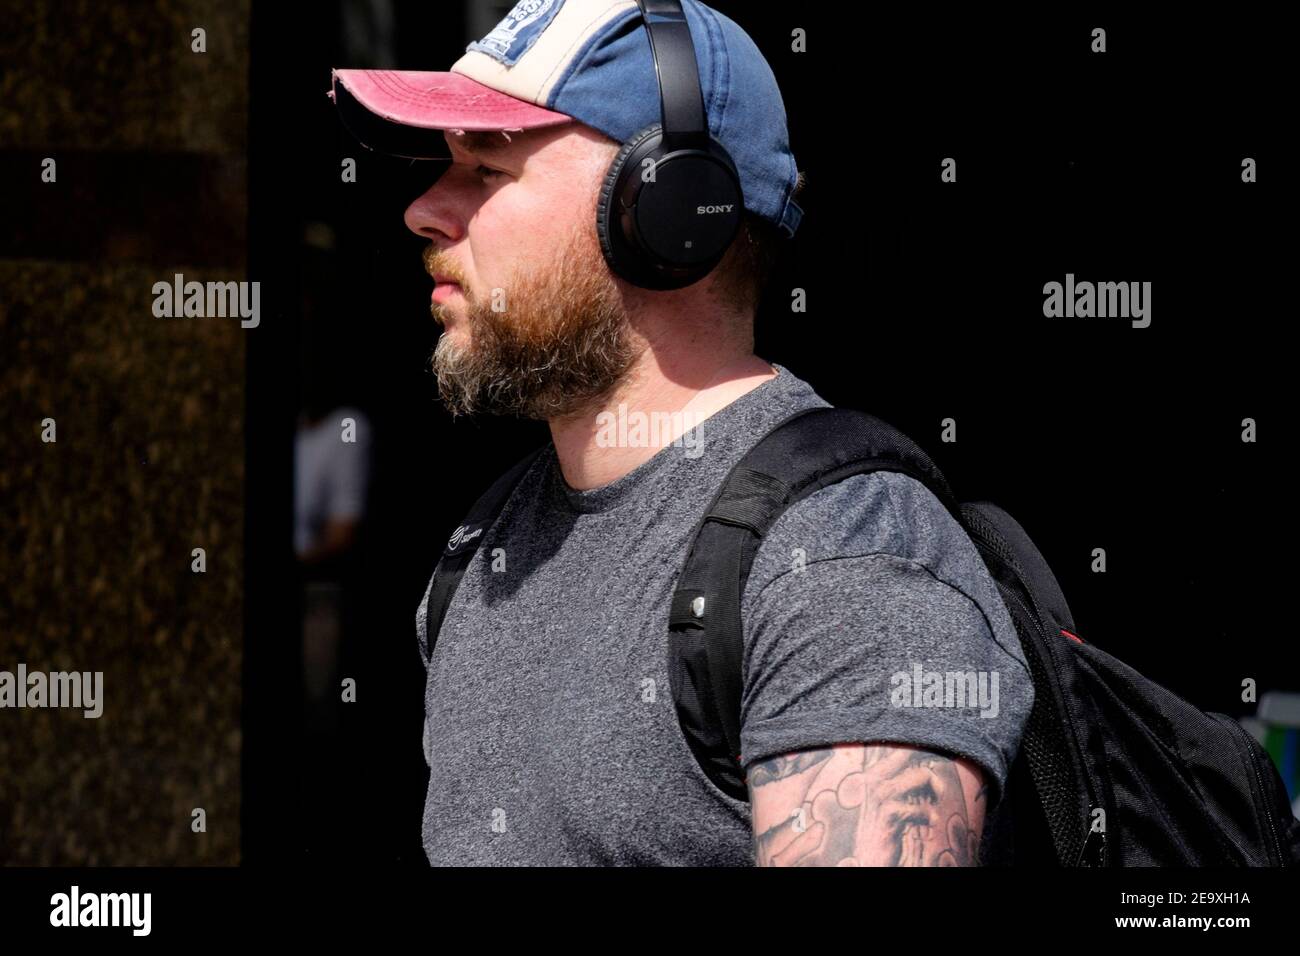 London street: male, 20s, beard, cap, Sony headphones. Stock Photo